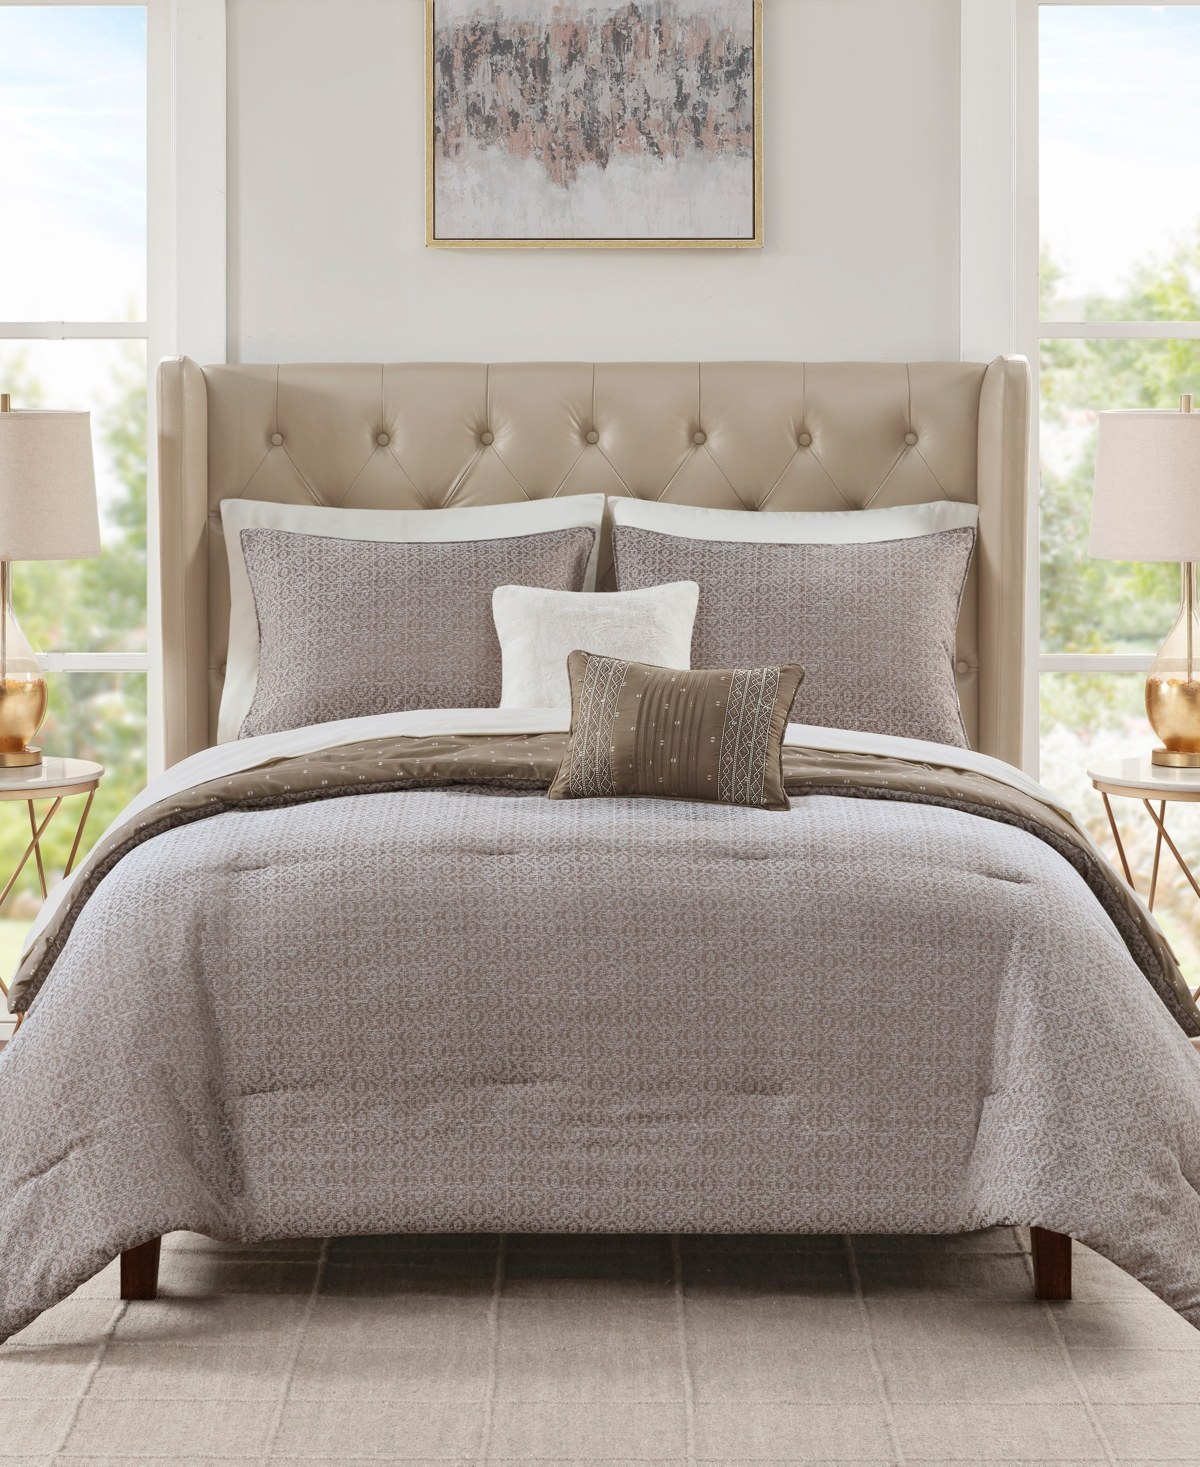 Jla Home Berkley 9-pc. Comforter Set, California King, Created For Macy's In Brown